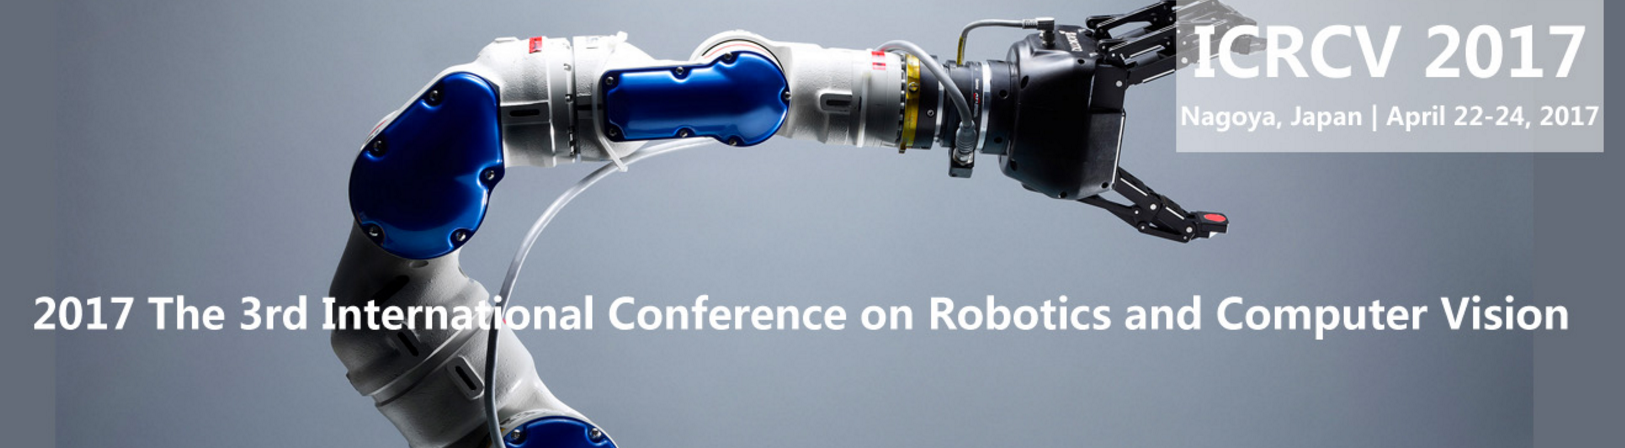 3rd International Conference on Robotics and Computer Vision(ICRCV 2017), Nagoya, Chubu, Japan